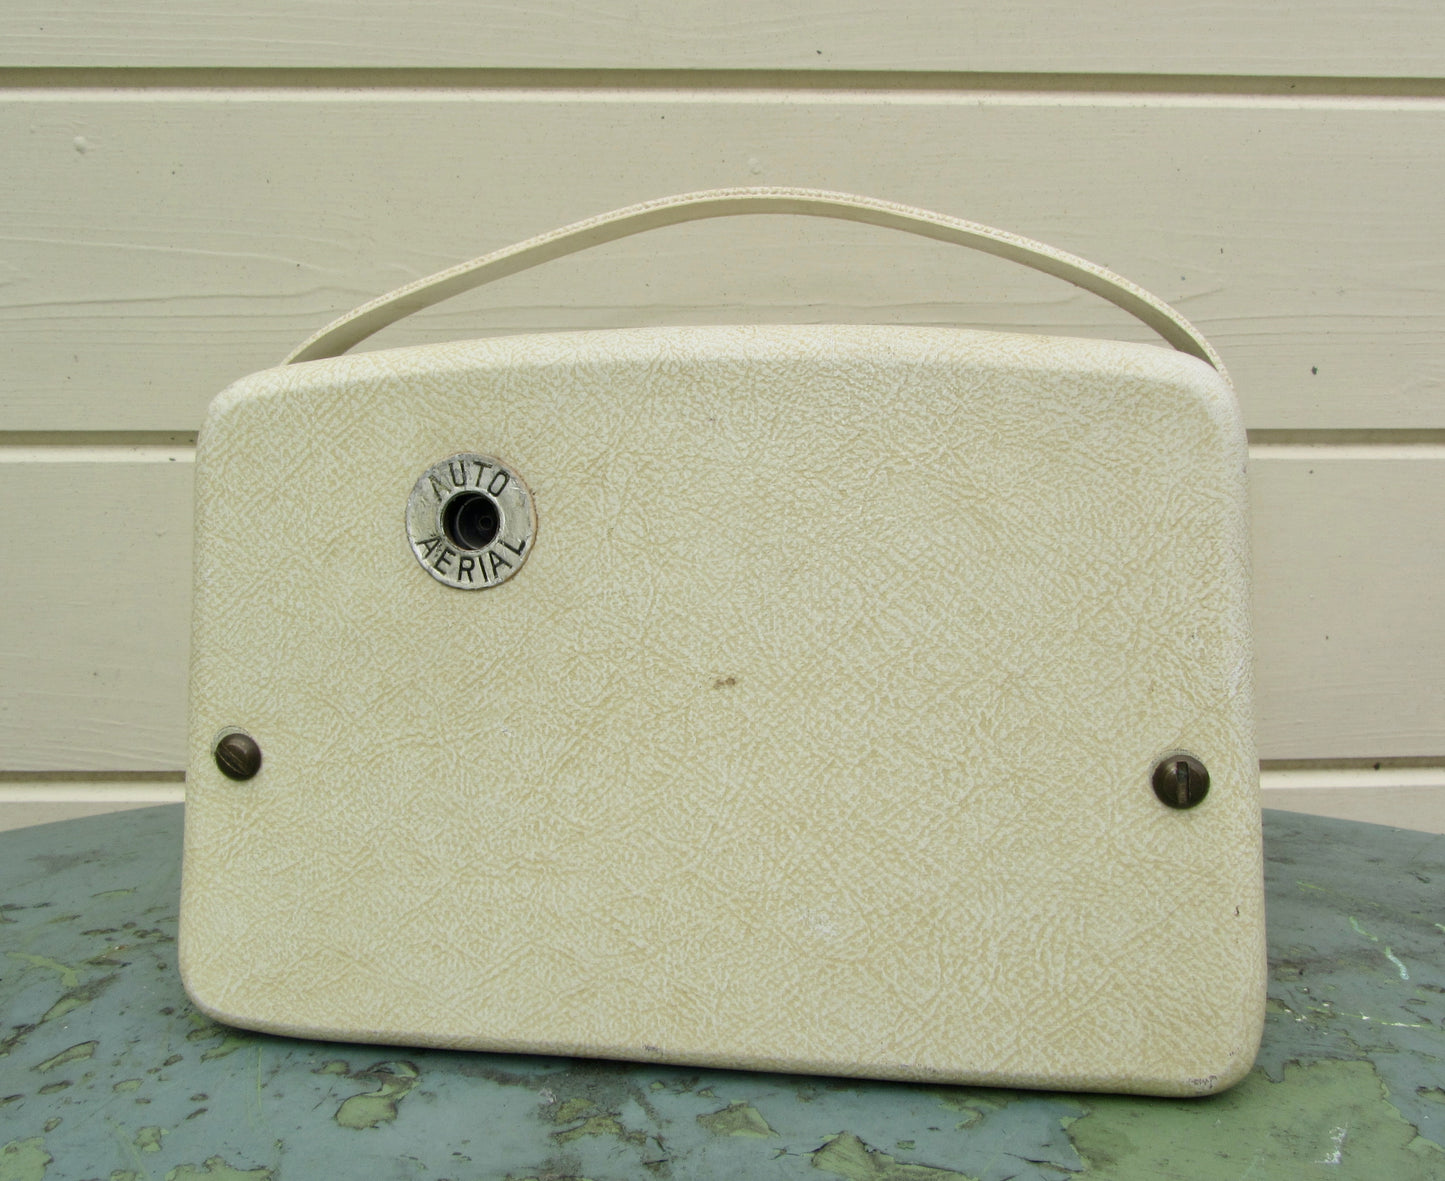 1959 Dansette RT111 Portable Radio With Cream Finish